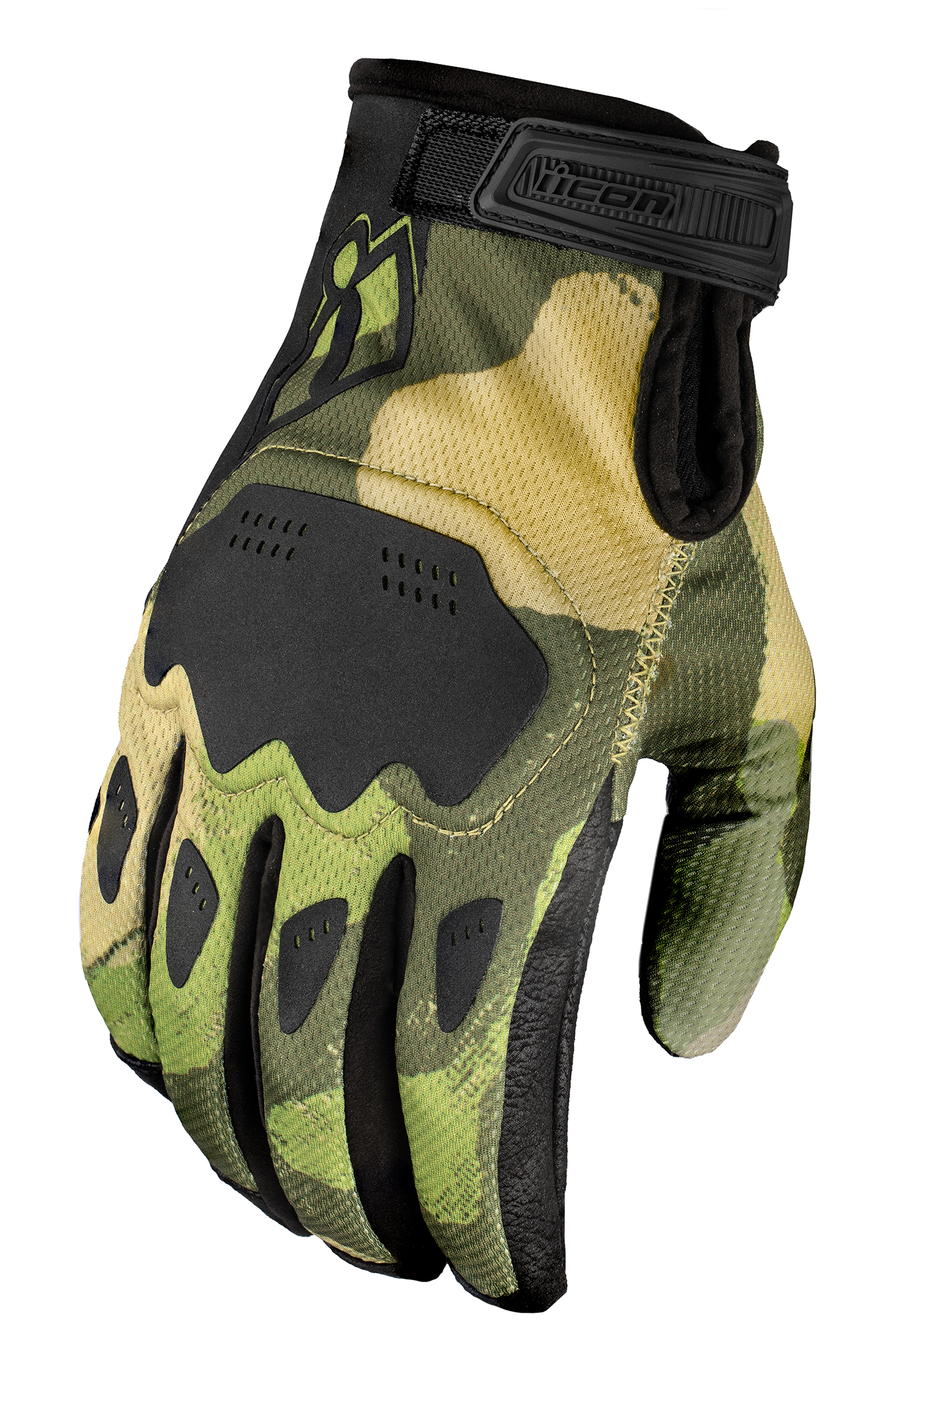 ICON Hooligan Magnacross™ Gloves - Camo Tan - XL 3301-4830